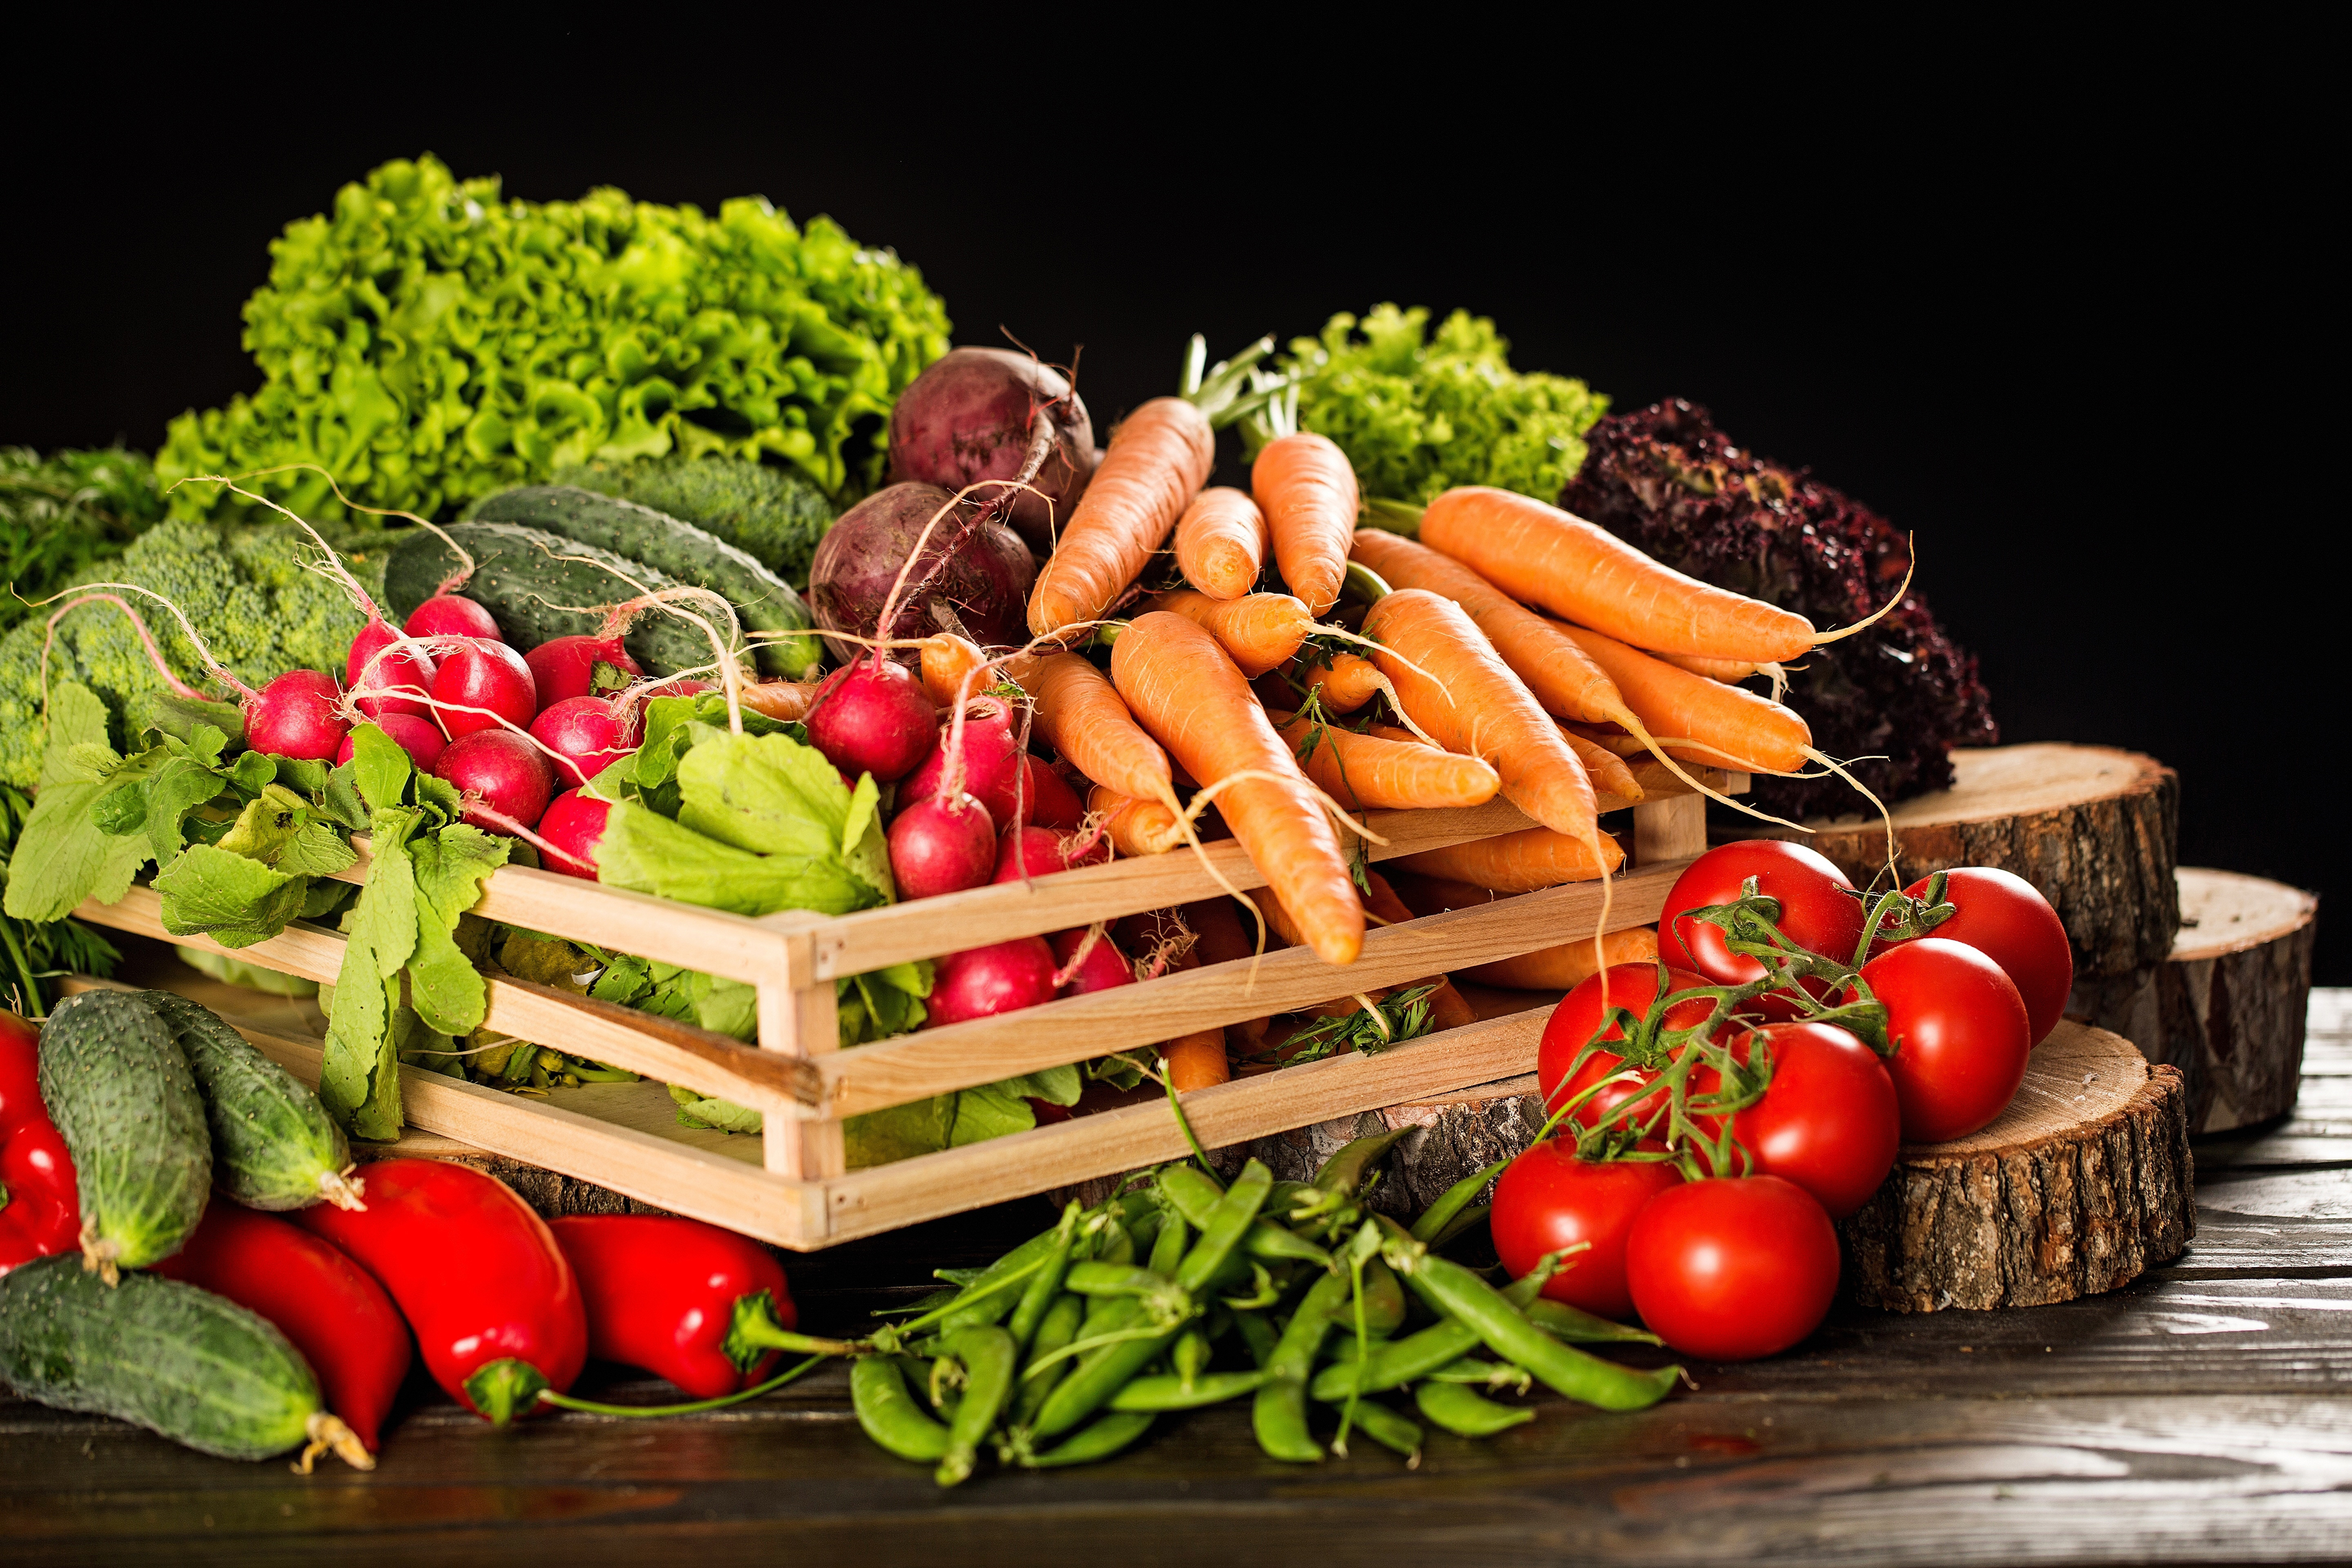 Vegetable products. Овощи. Щи. Продукты овощи. Овощи для щей.